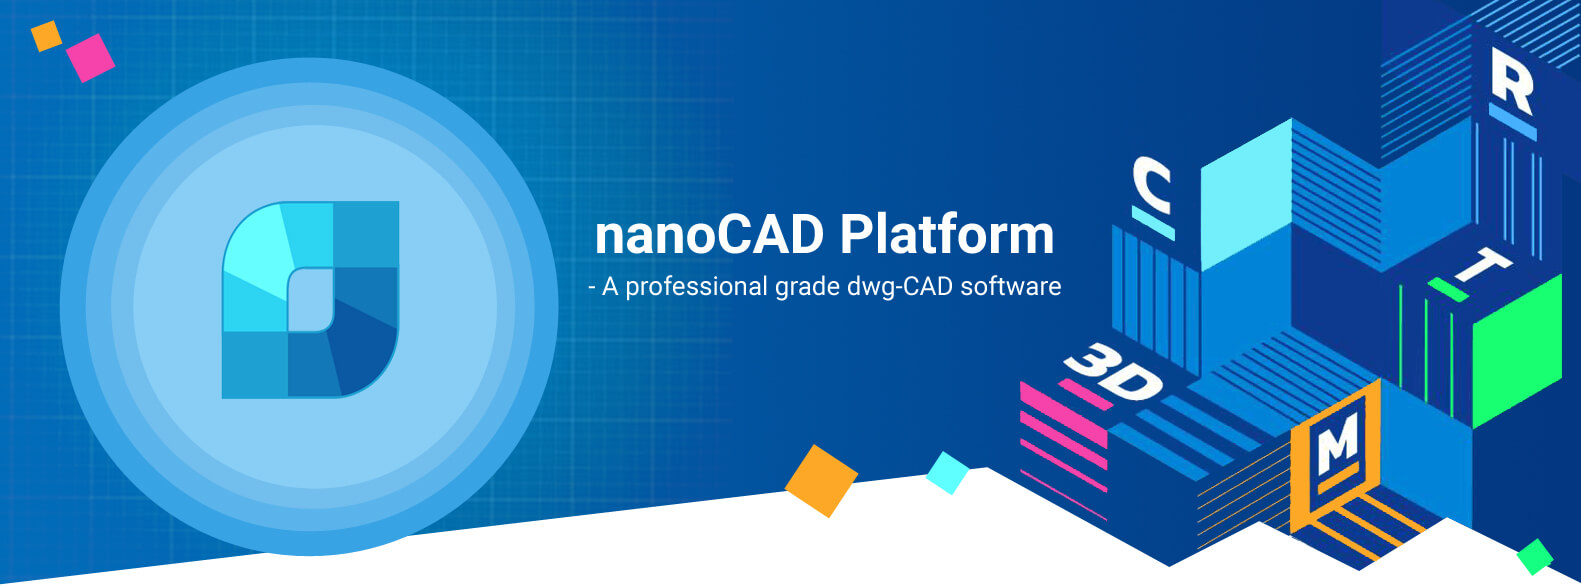 nanoCAD Platform